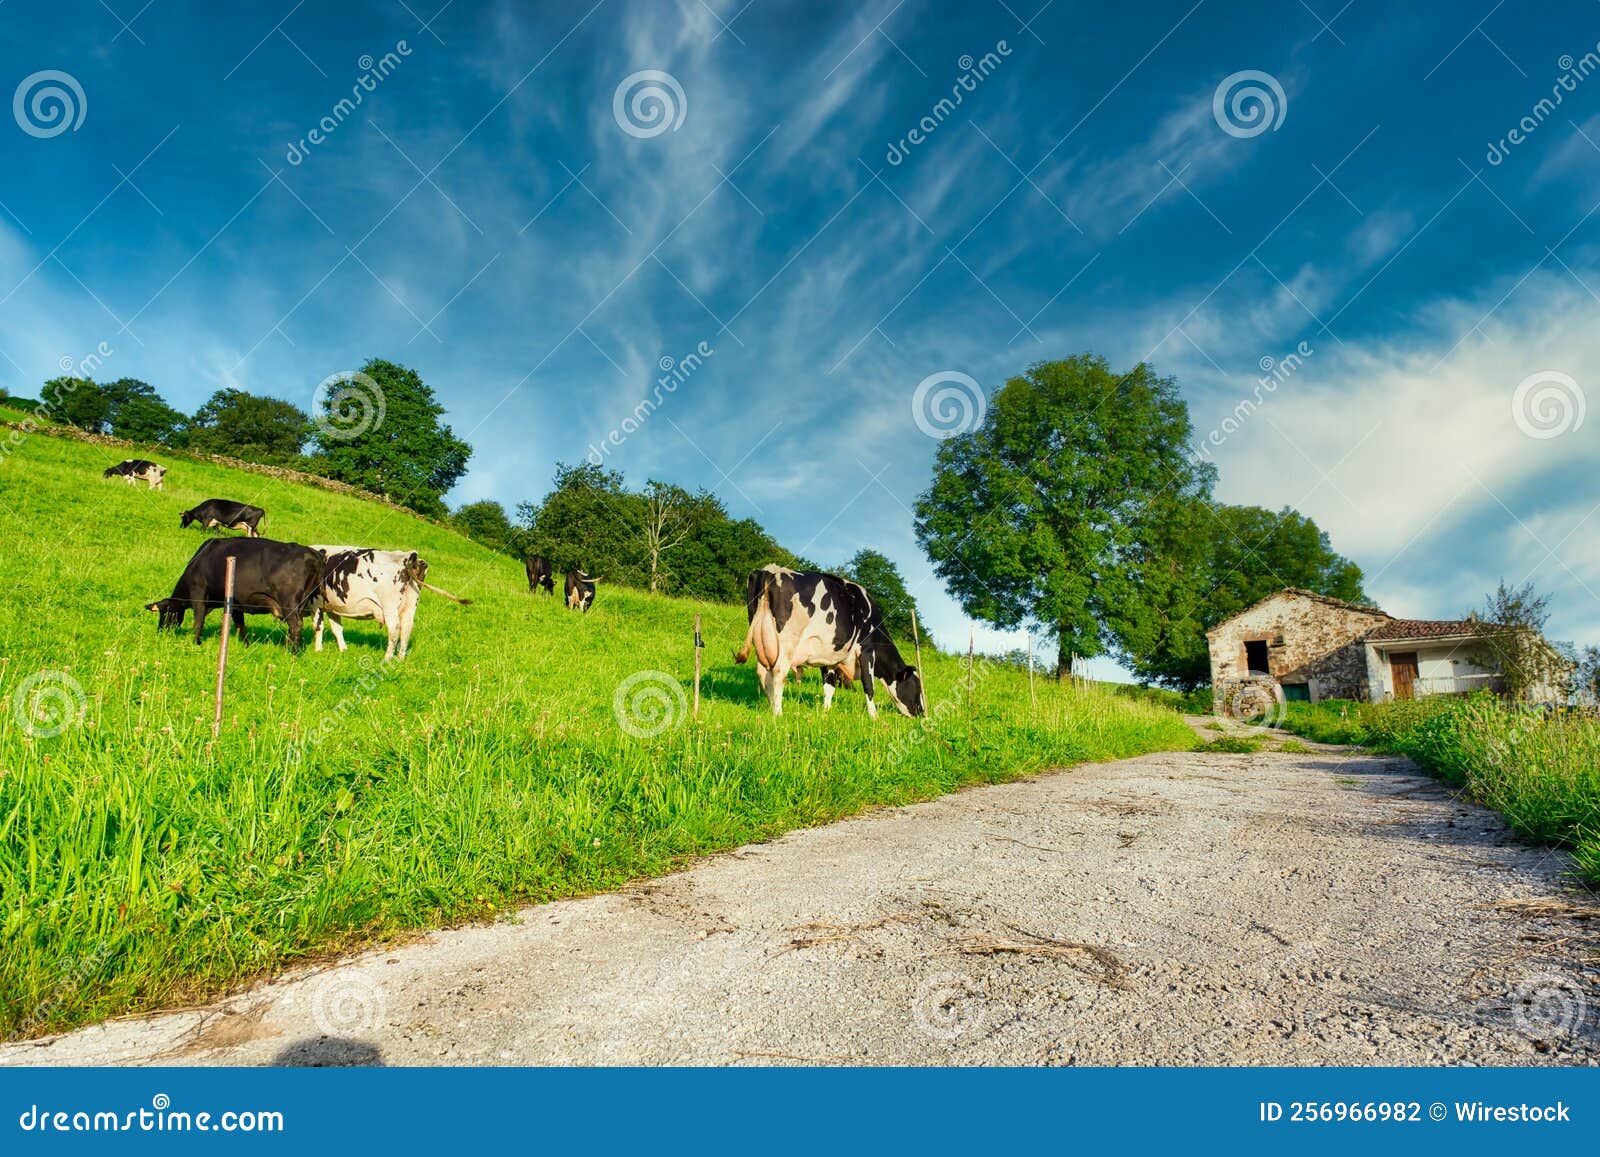 flock of cows grazing on a field in valles pasiegos, picos de europa, cantabria